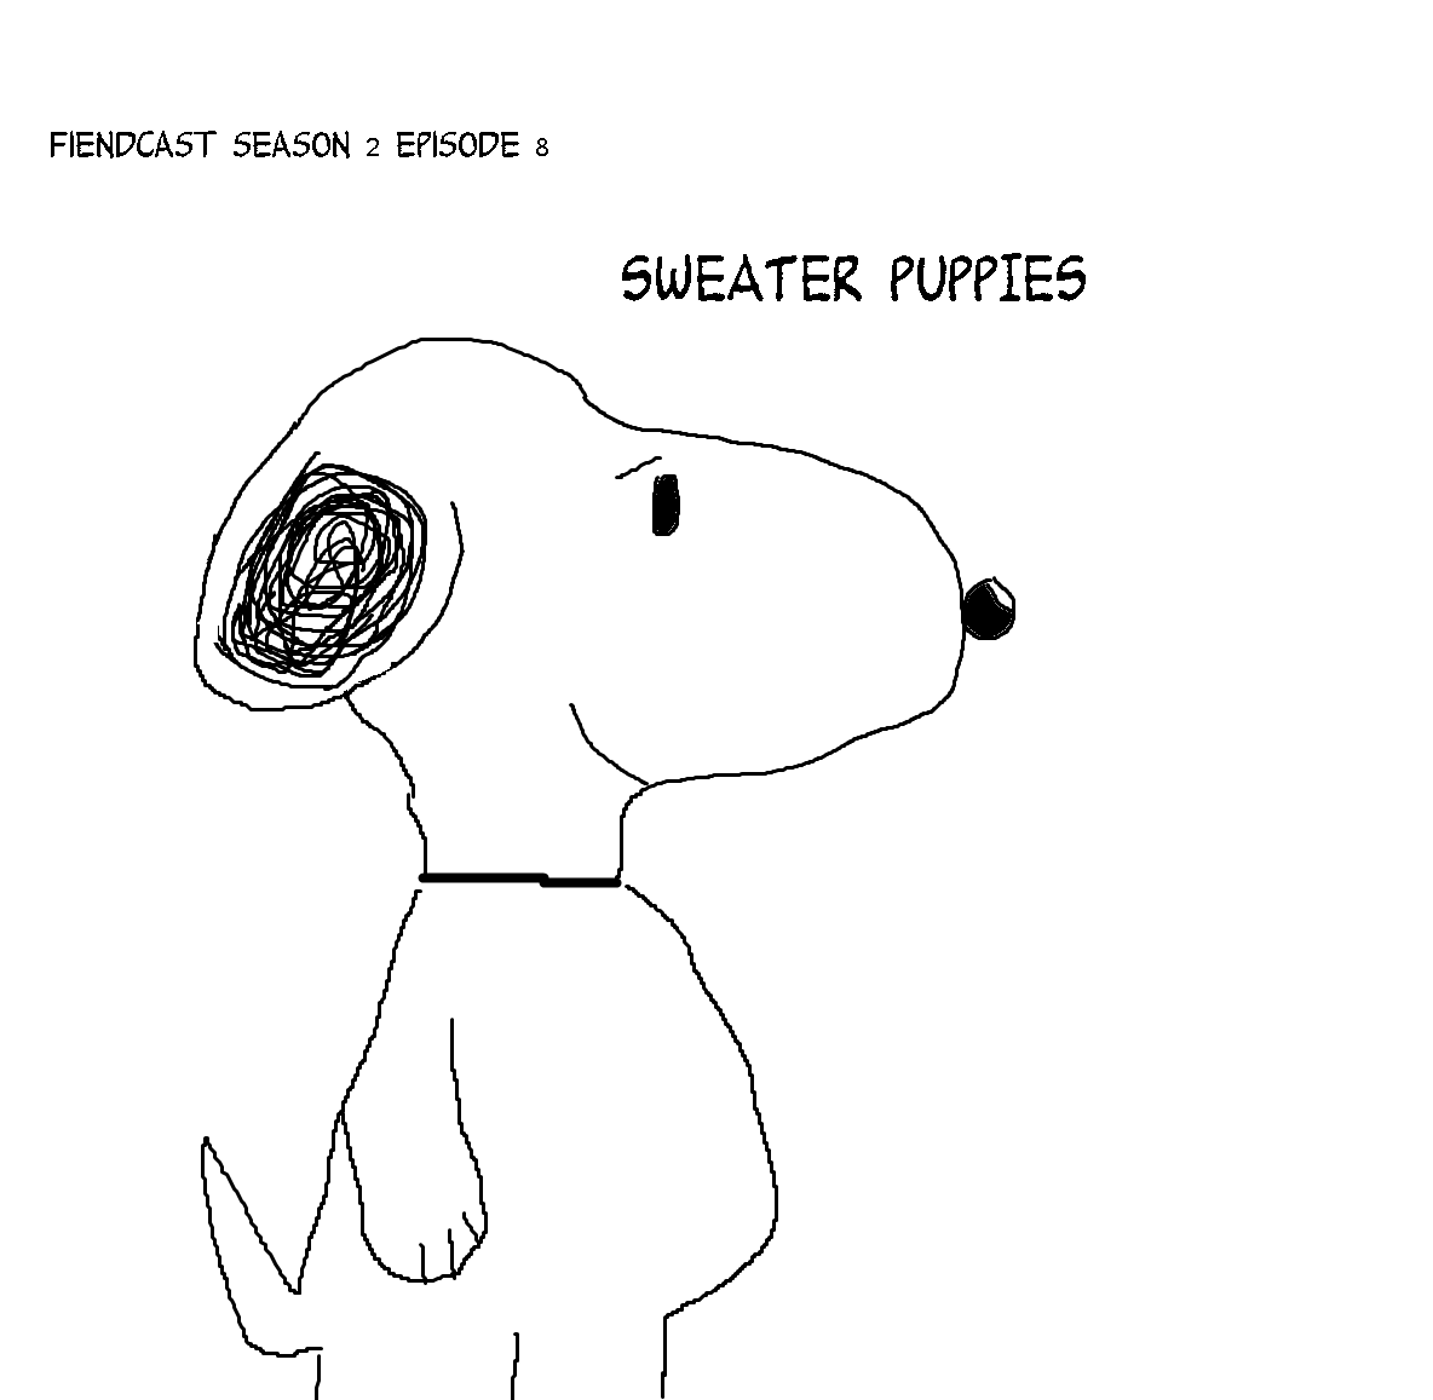 Season 2 Episode 8 - Sweater Puppies